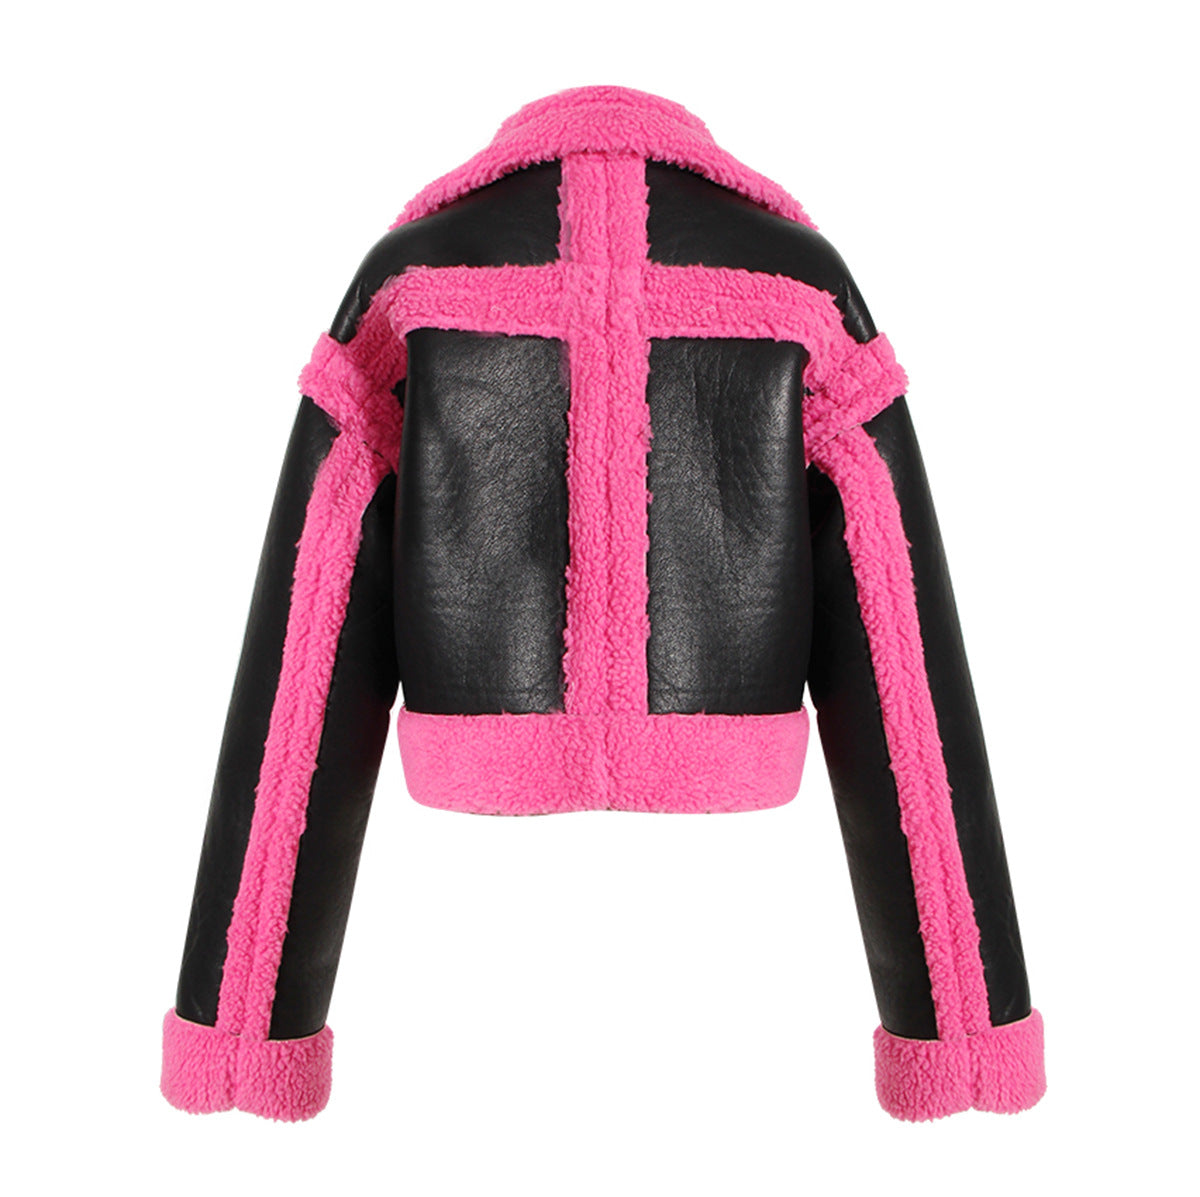 Jackets: Big Collared Motorcycle Jacket Pink   Fur Jacket